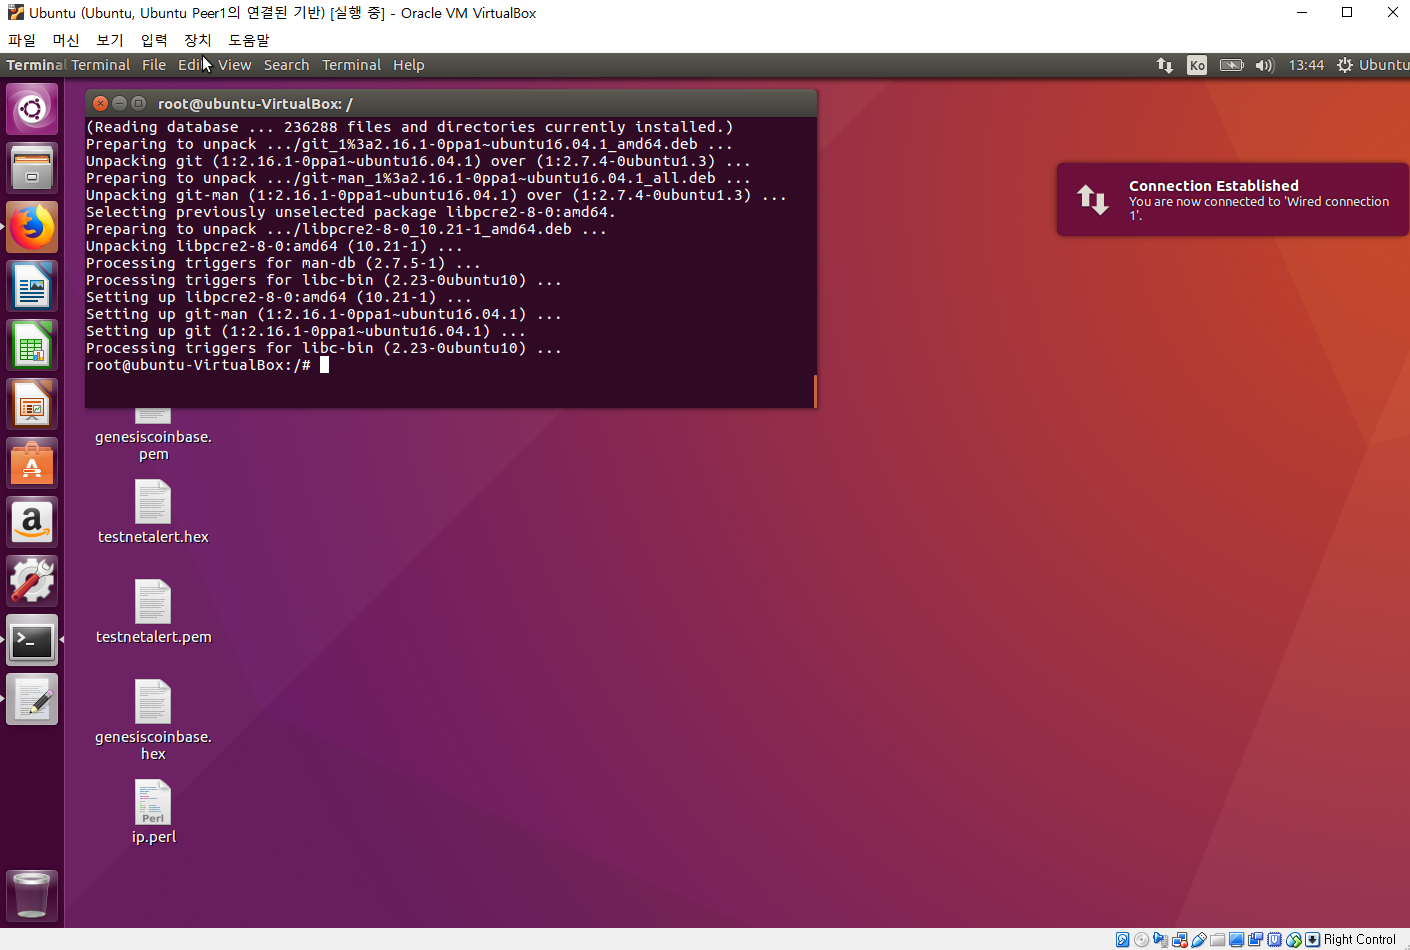 How to use linux. Графический Интерфейс Ubuntu. Линукс убунту Интерфейс 2021. Операционная система Ubuntu 20.04. Пользовательский Интерфейс ОС Linux.